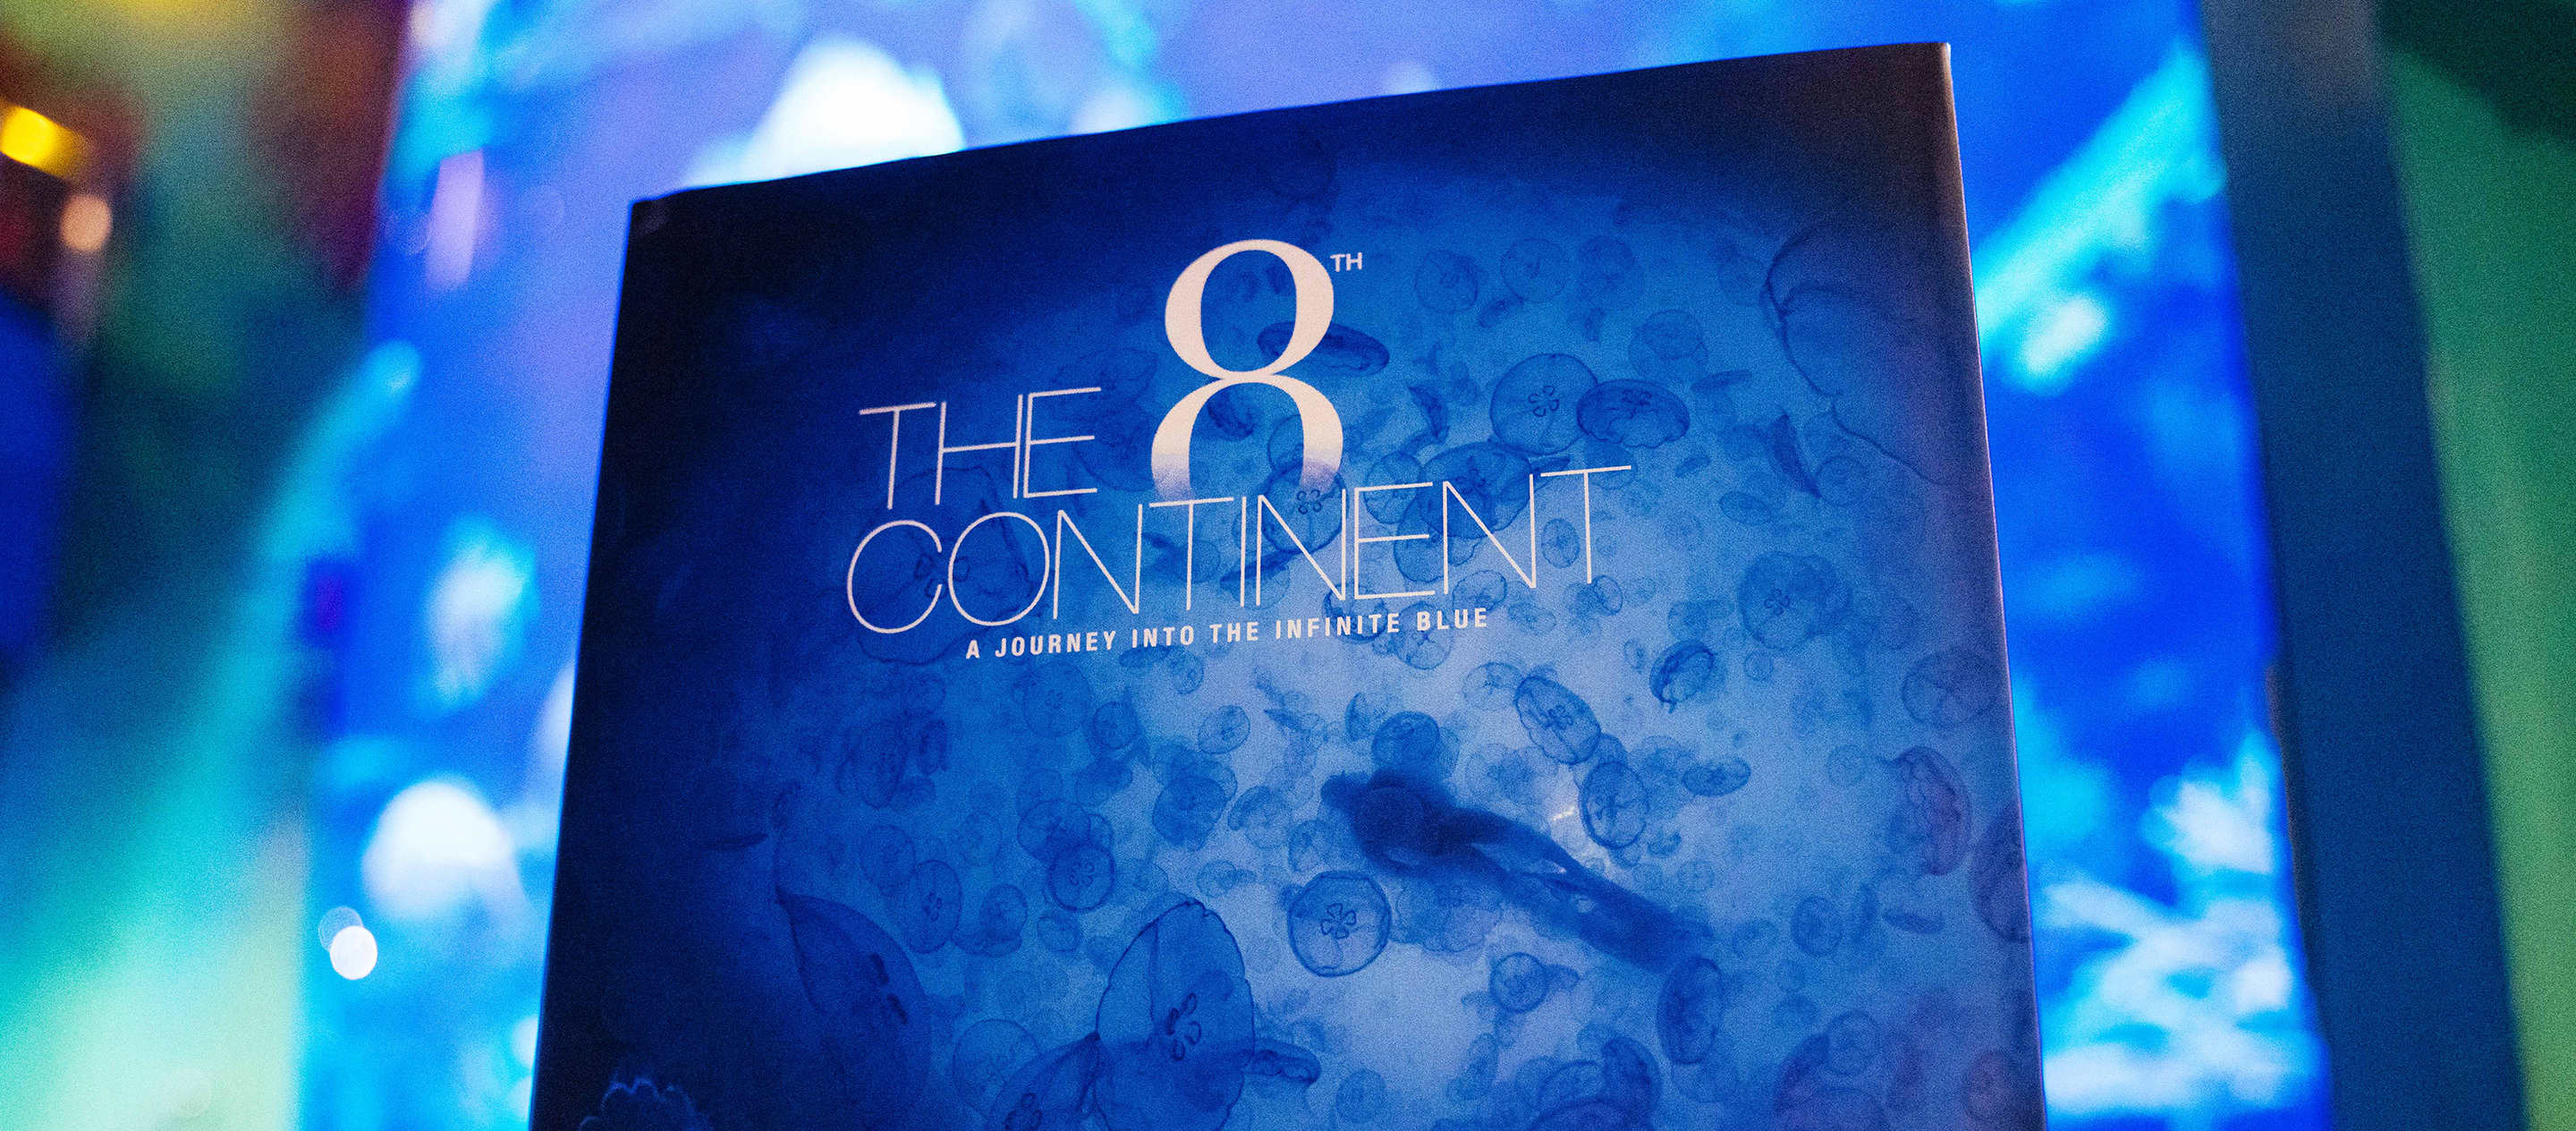 The 8th Continent:  หนังสือภาพถ่ายรวมสุดยอดผลงานของ 6 ช่างภาพใต้น้ำไทยที่โด่งดังระดับโลก